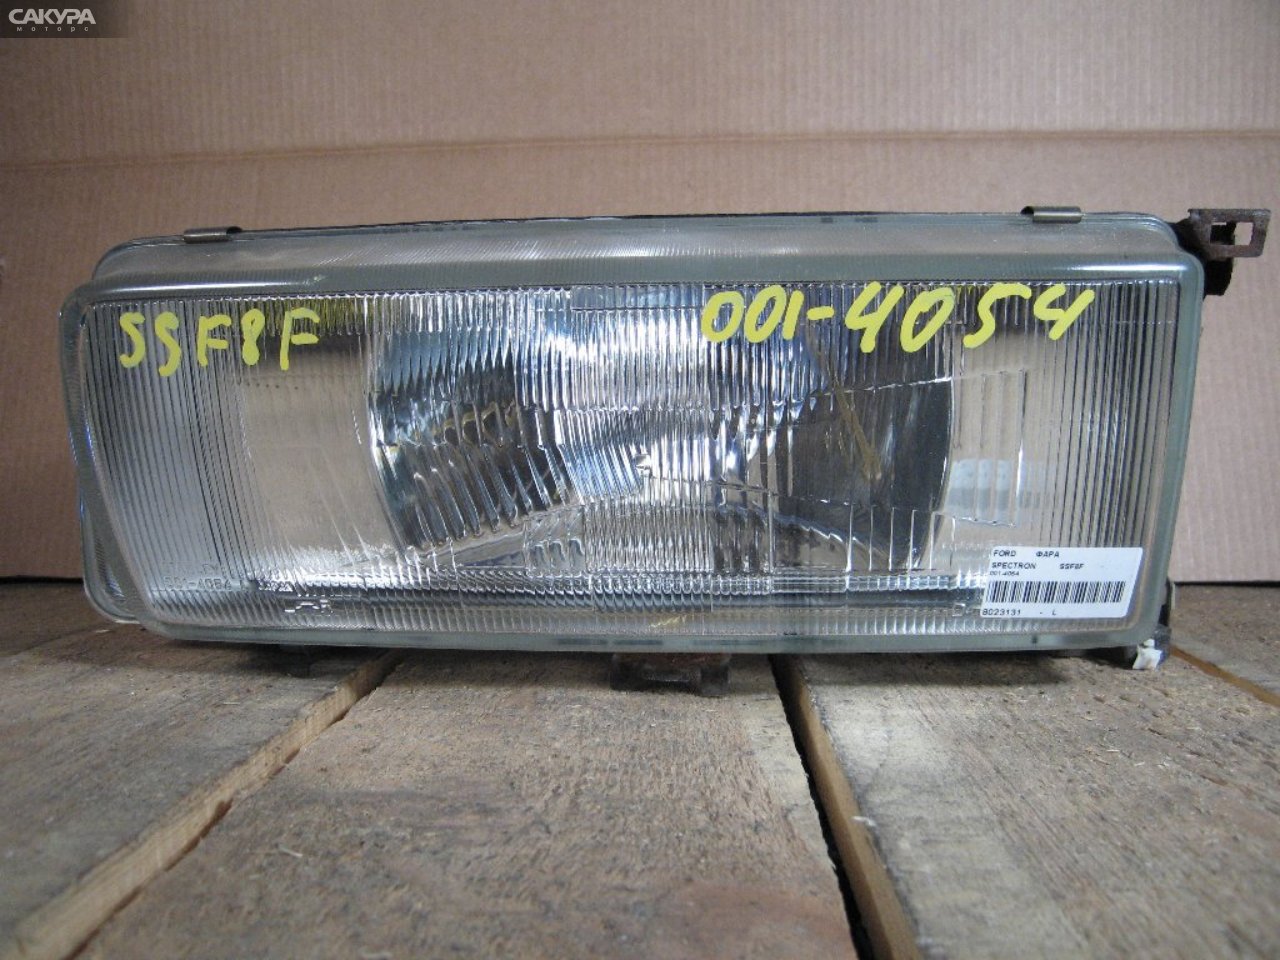 Фара левая Ford Spectron SSF8RF 001-4054: купить в Сакура Абакан.